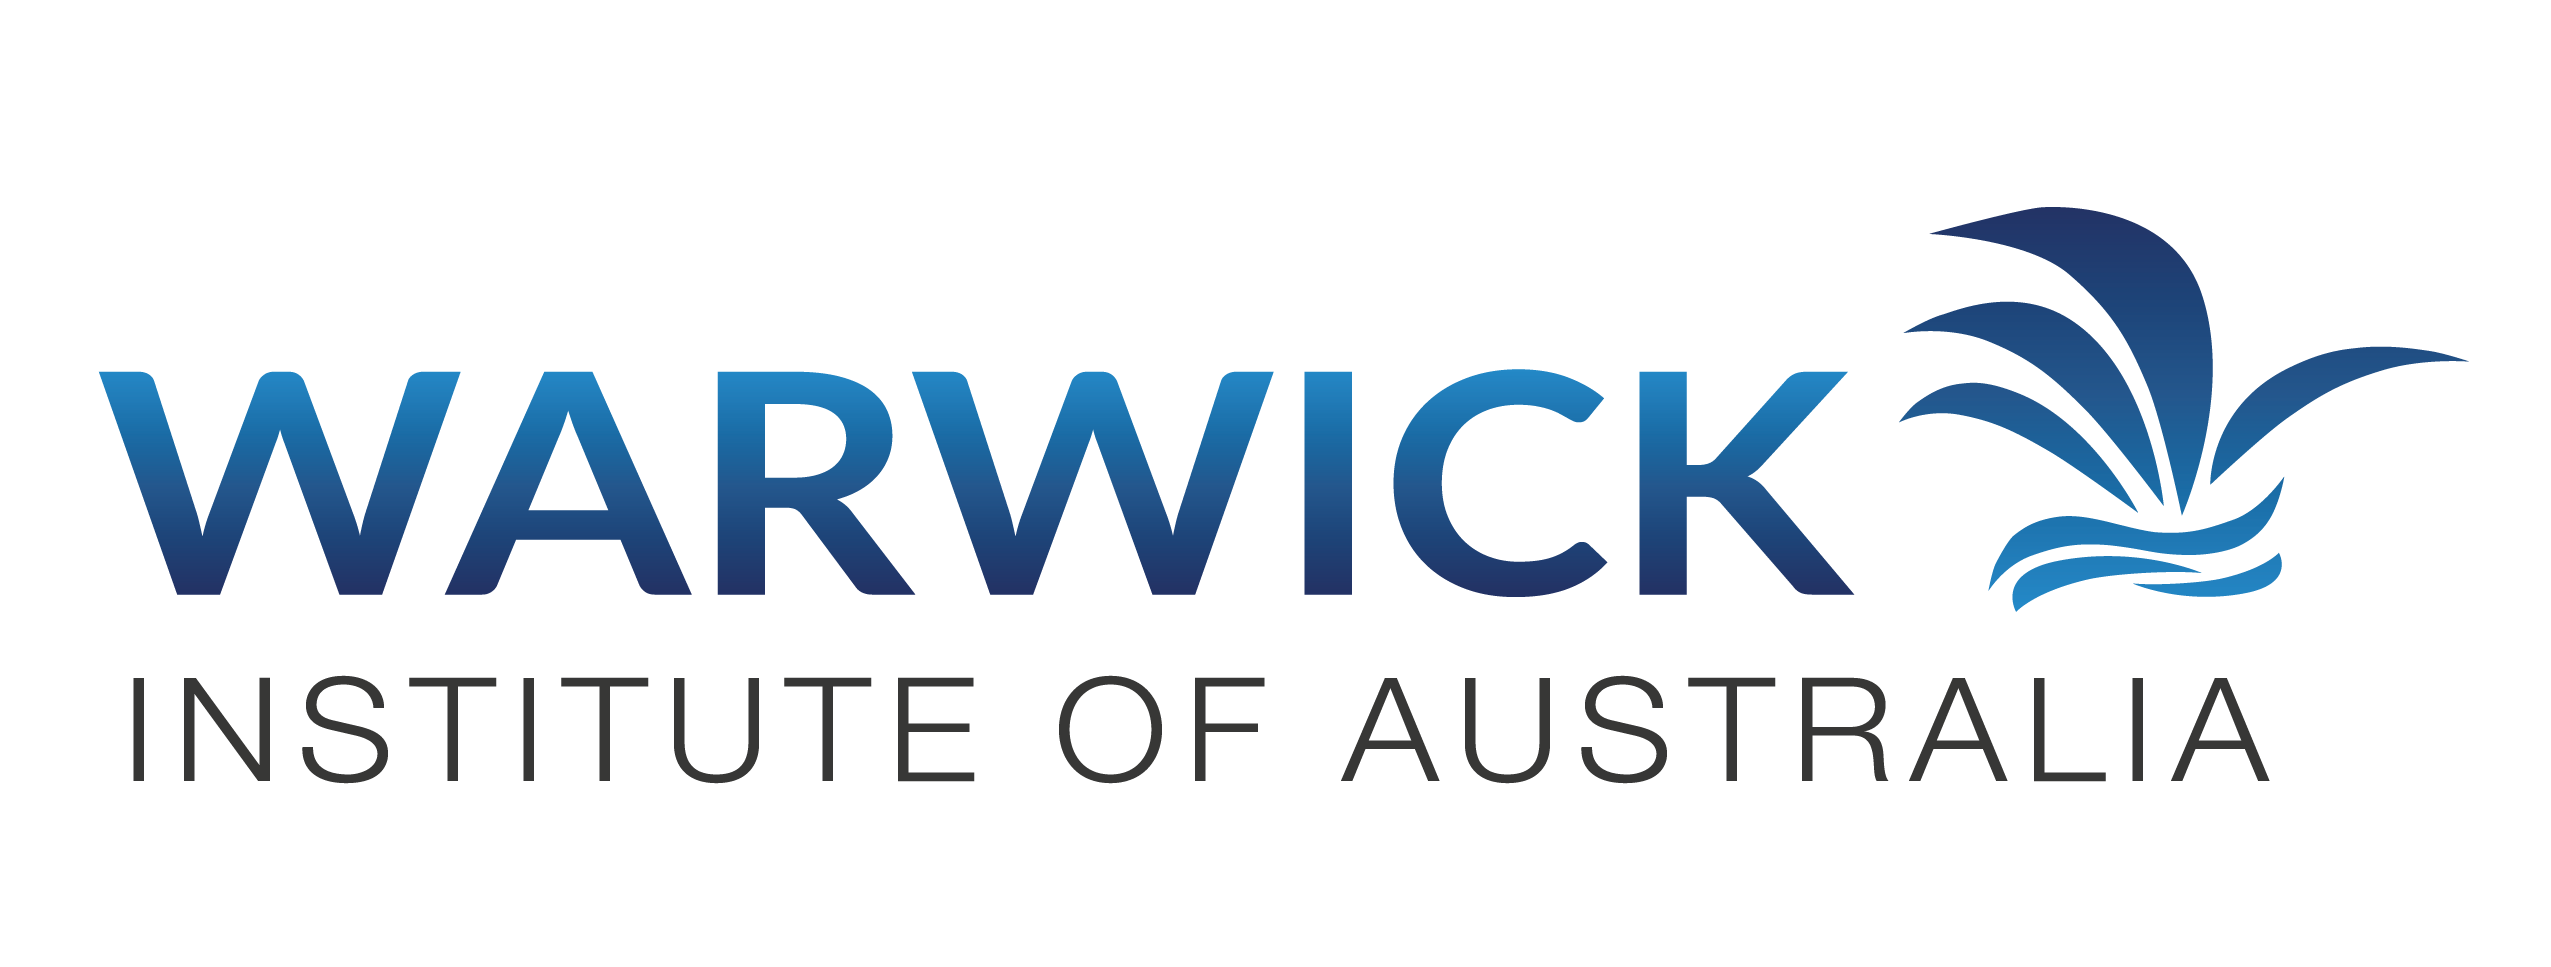 Warwick Institute of Australia Pty Ltd , Times Group